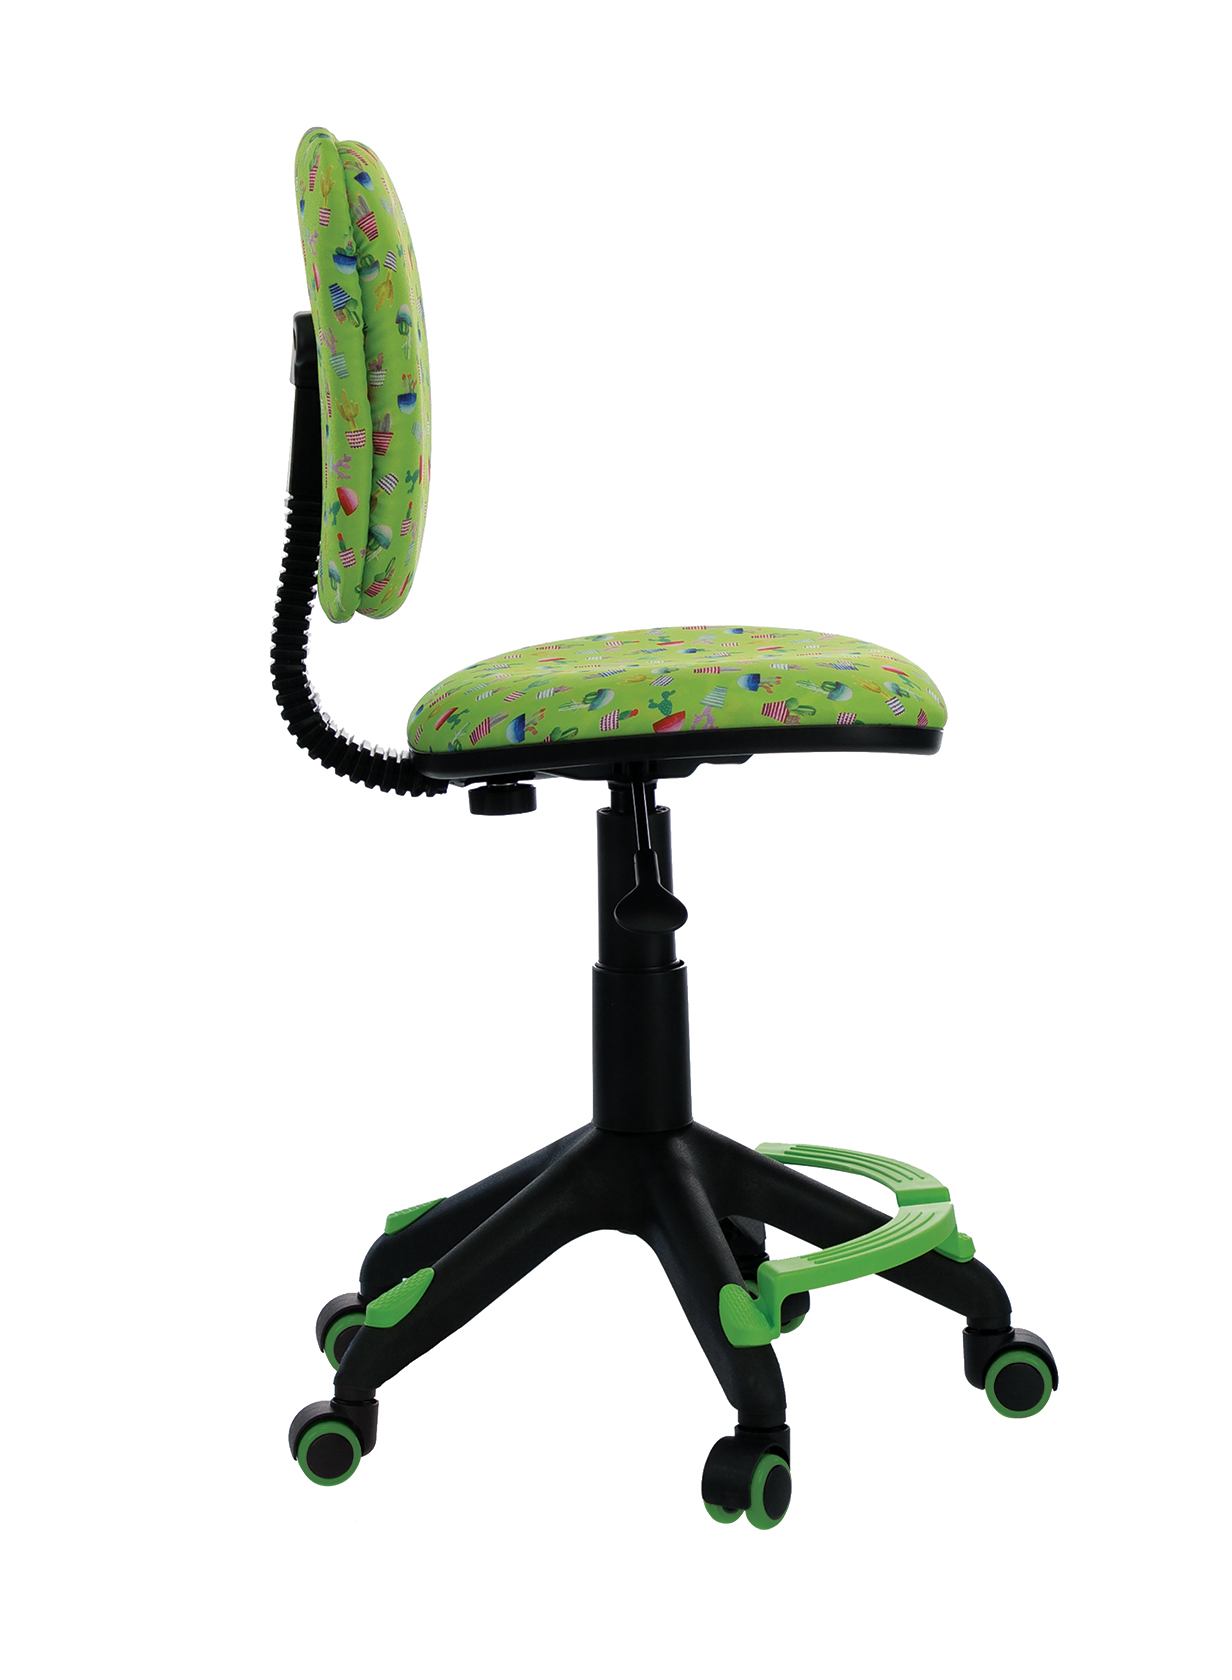 стул для компьютера ребенку